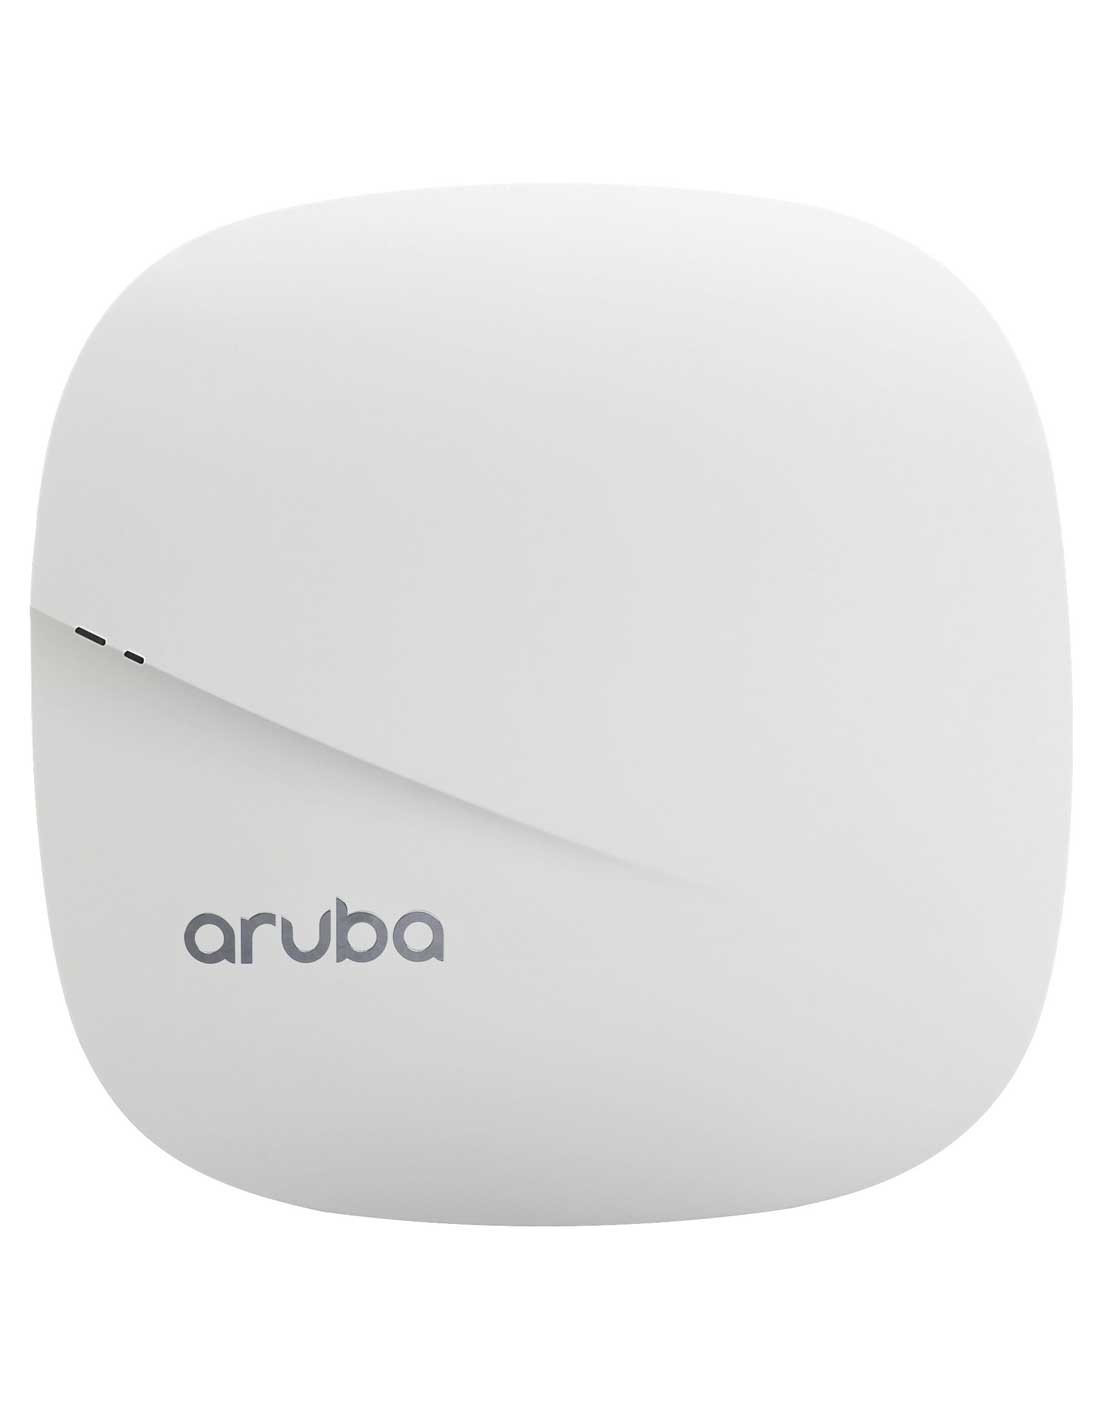 Aruba IAP-305 (RW) Wireless Access Point (JX945A) images